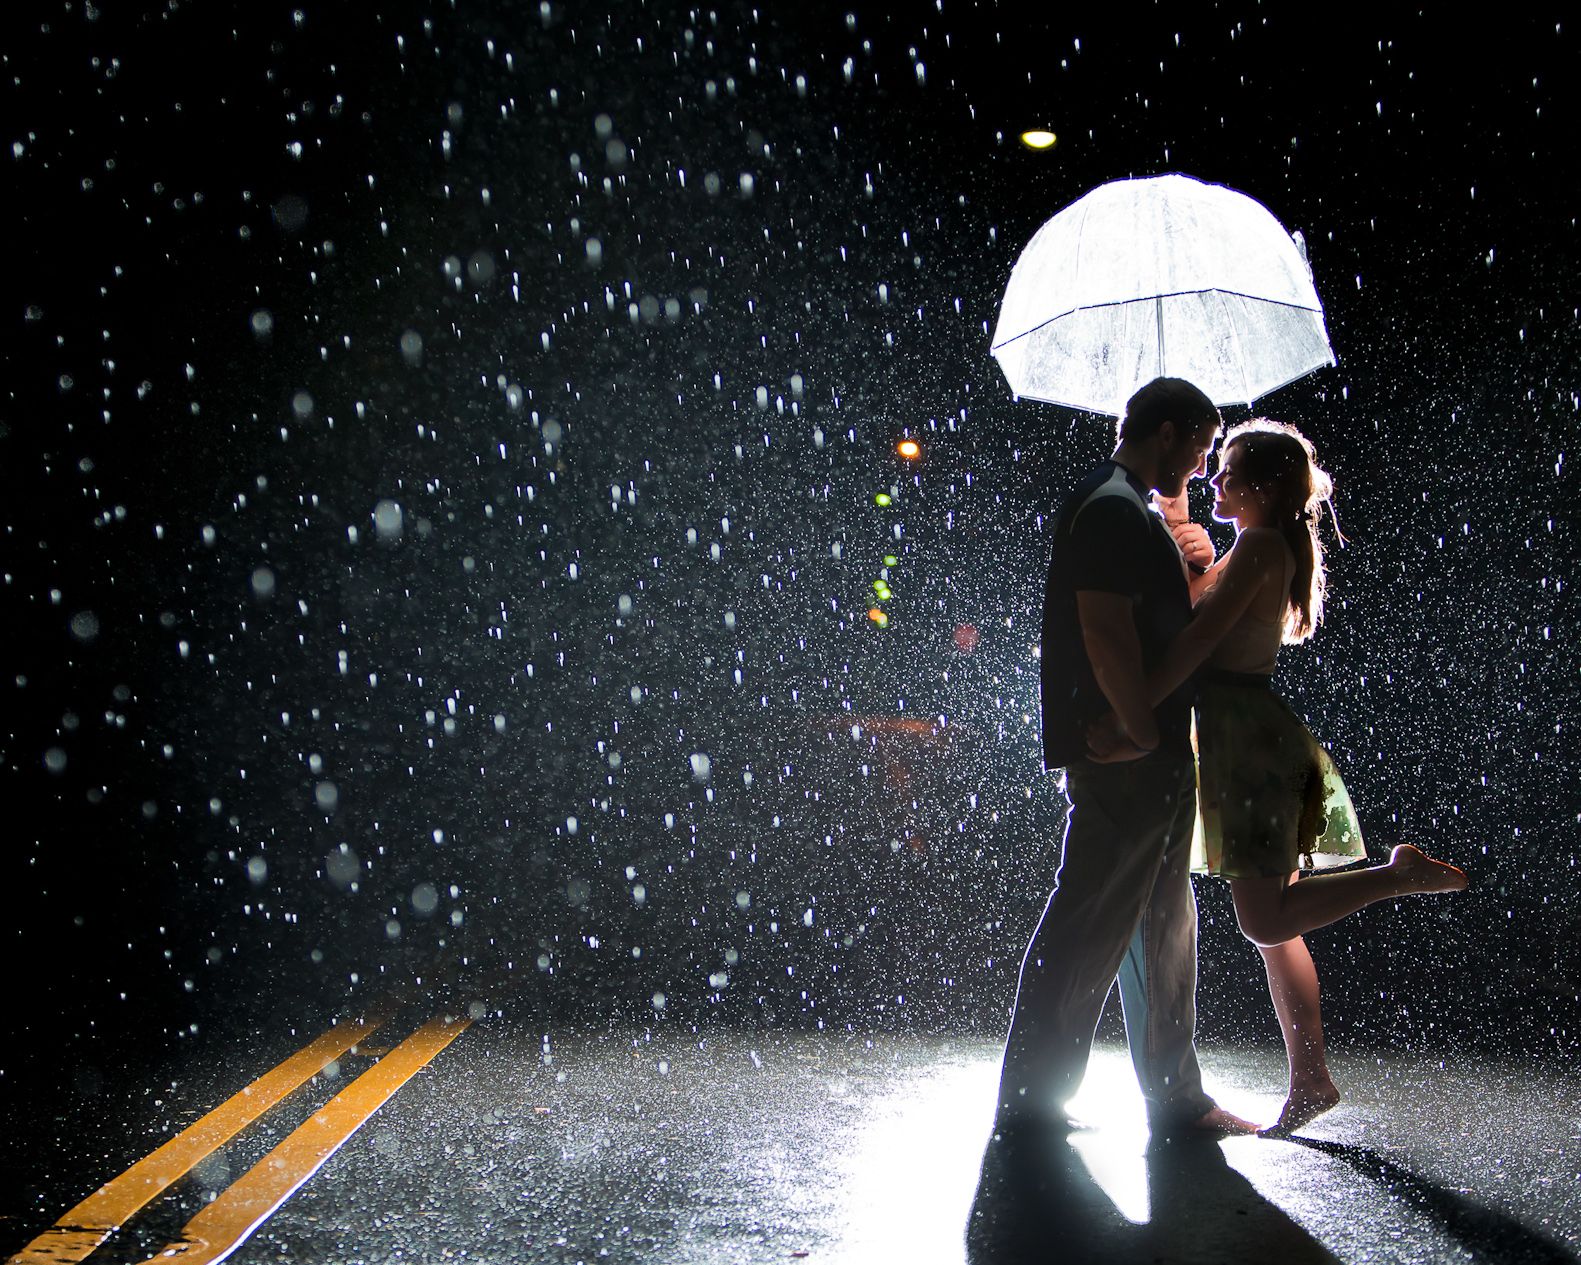 One Direction Preferences Dancing In The Rain. Rain wallpaper, Couple romance, Dancing in the rain